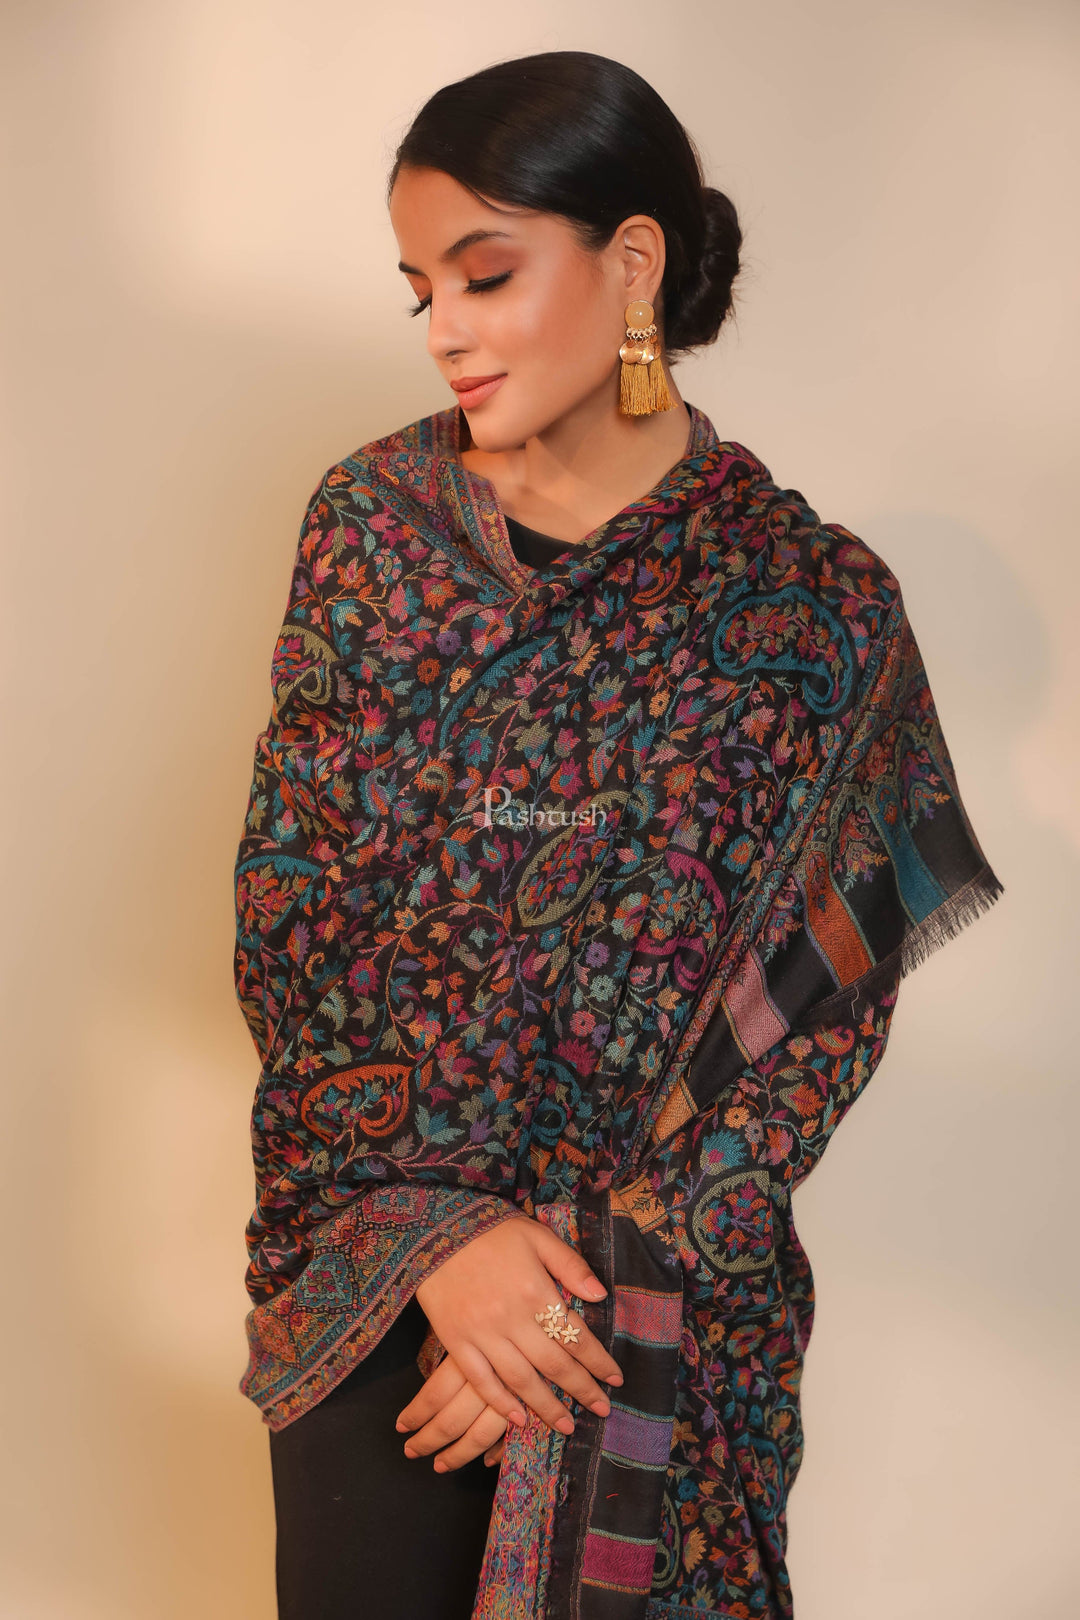 Pashtush India Womens Shawls Pashtush women pure wool, woolmark certified shawl, ethnic weave design, black